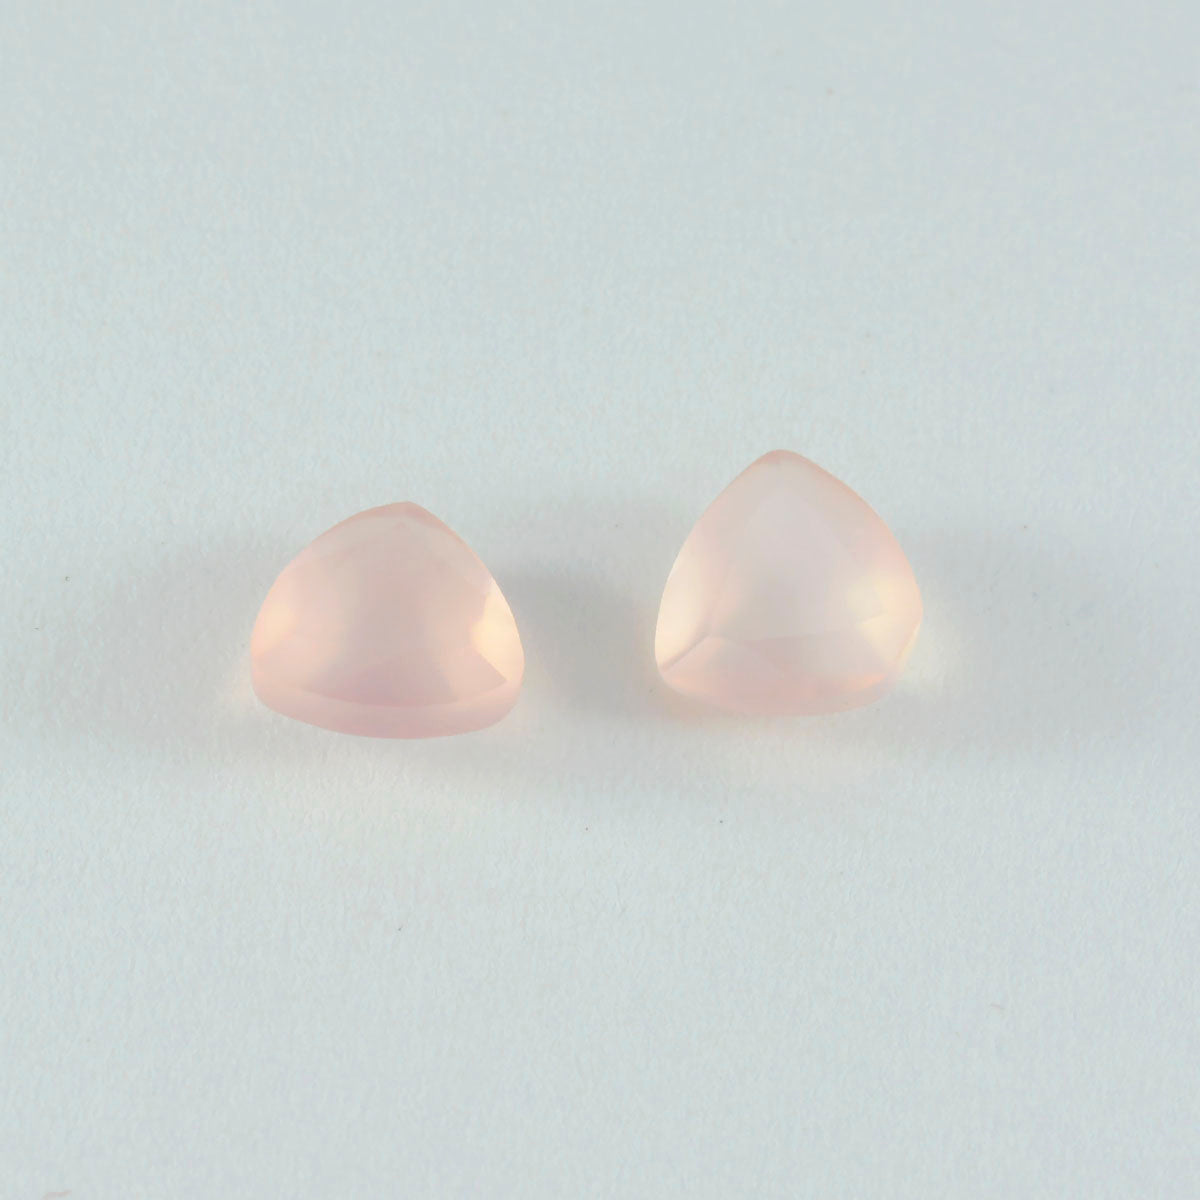 Riyogems 1PC Pink Rose Quartz Faceted 12x12 mm Trillion Shape Good Quality Stone